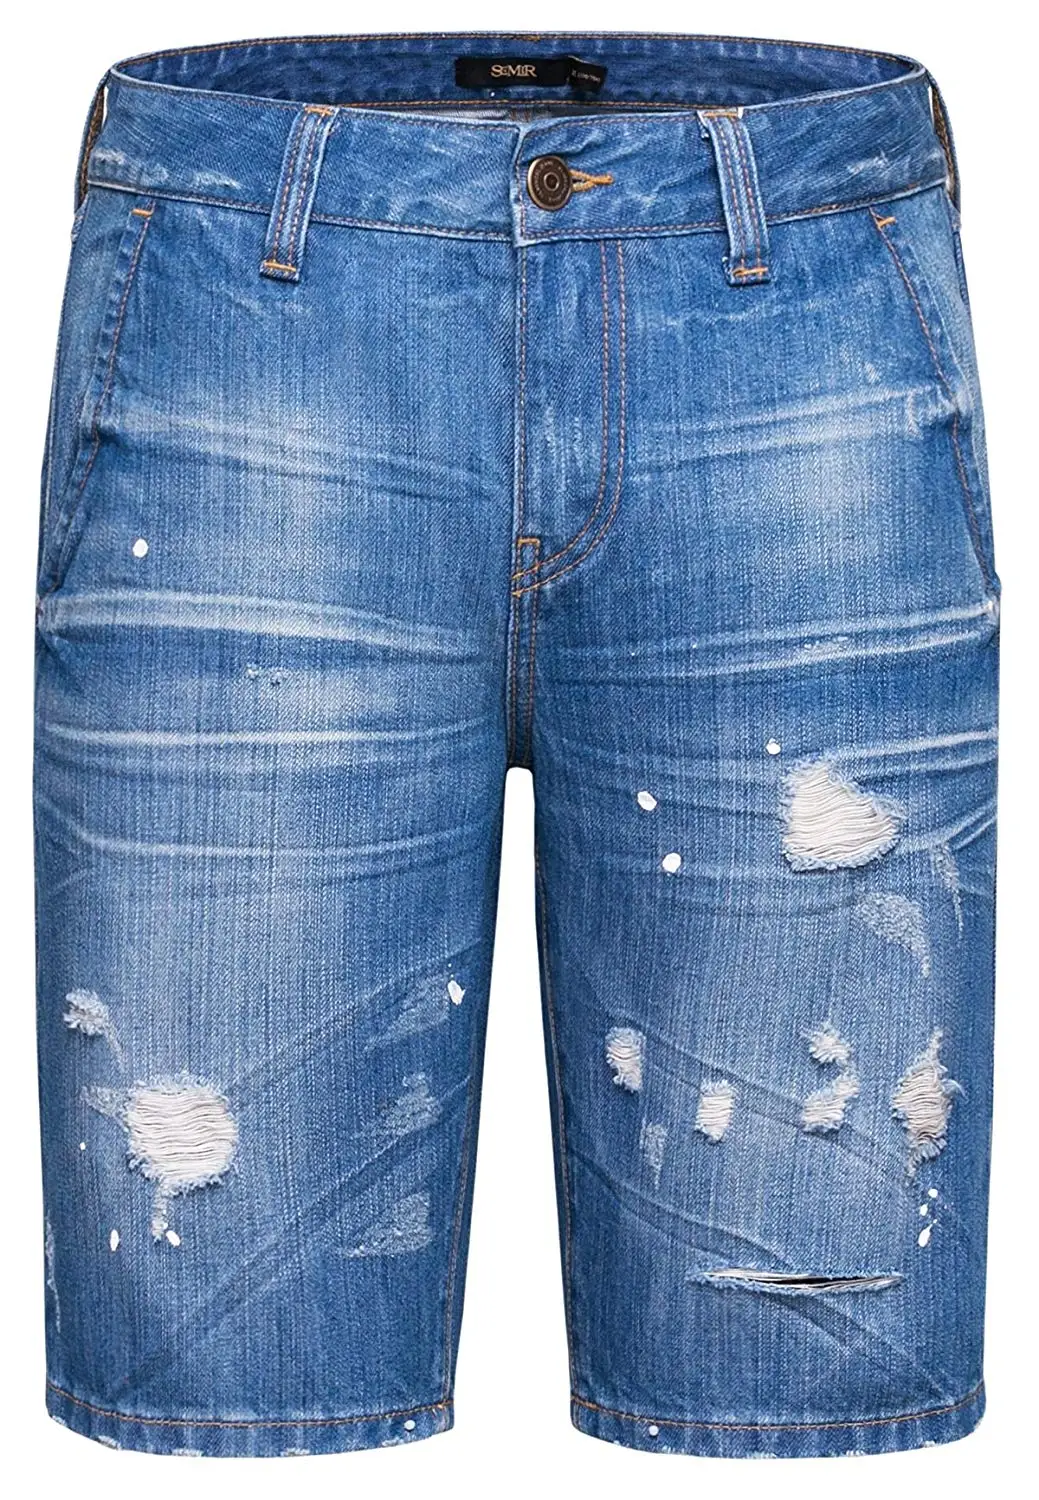 mr price jeans mens